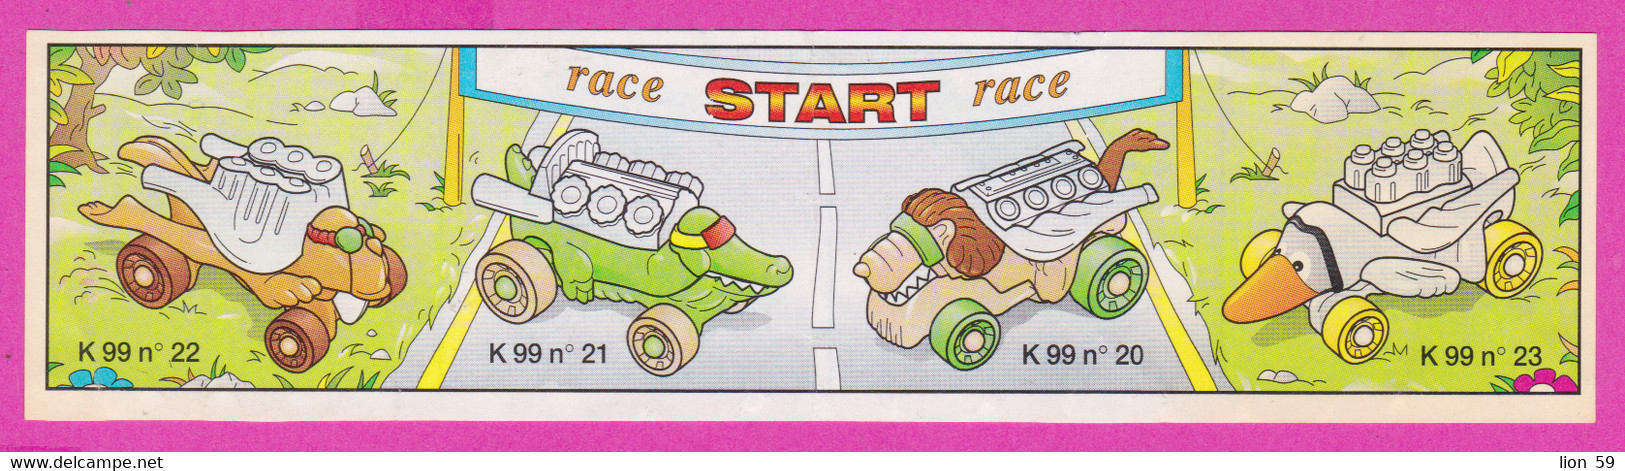 264630 / Instruction Kinder Surprise - K99n.21 Car Crocodiles Animal Race START Race + K99n.22+K99n.20+K99n.23 - Istruzioni